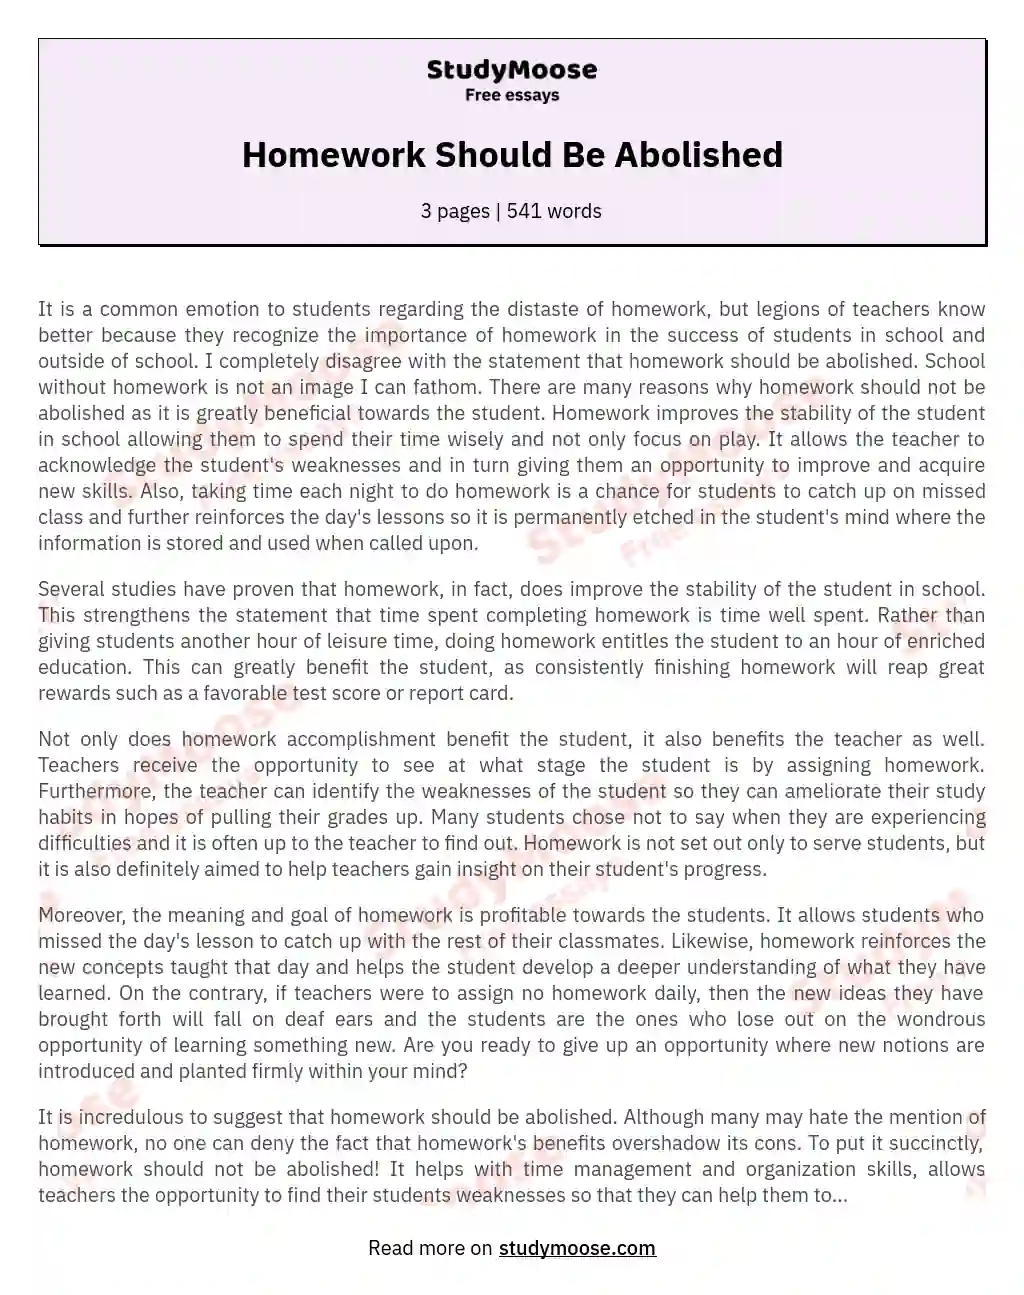 debate on homework should not be abolished